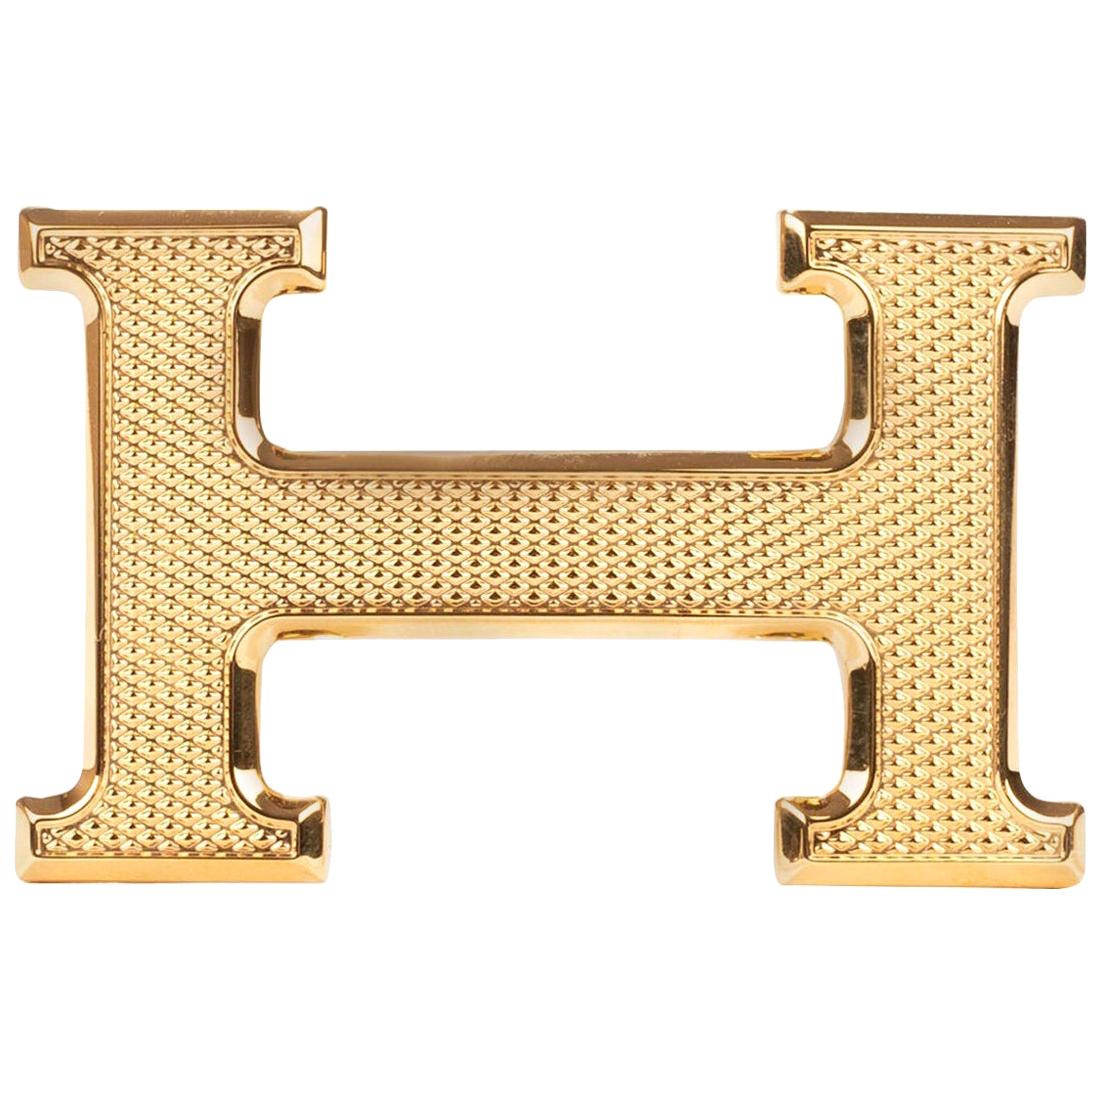 Brand new Hermès belt buckle model "Guillochée" in shiny gold !